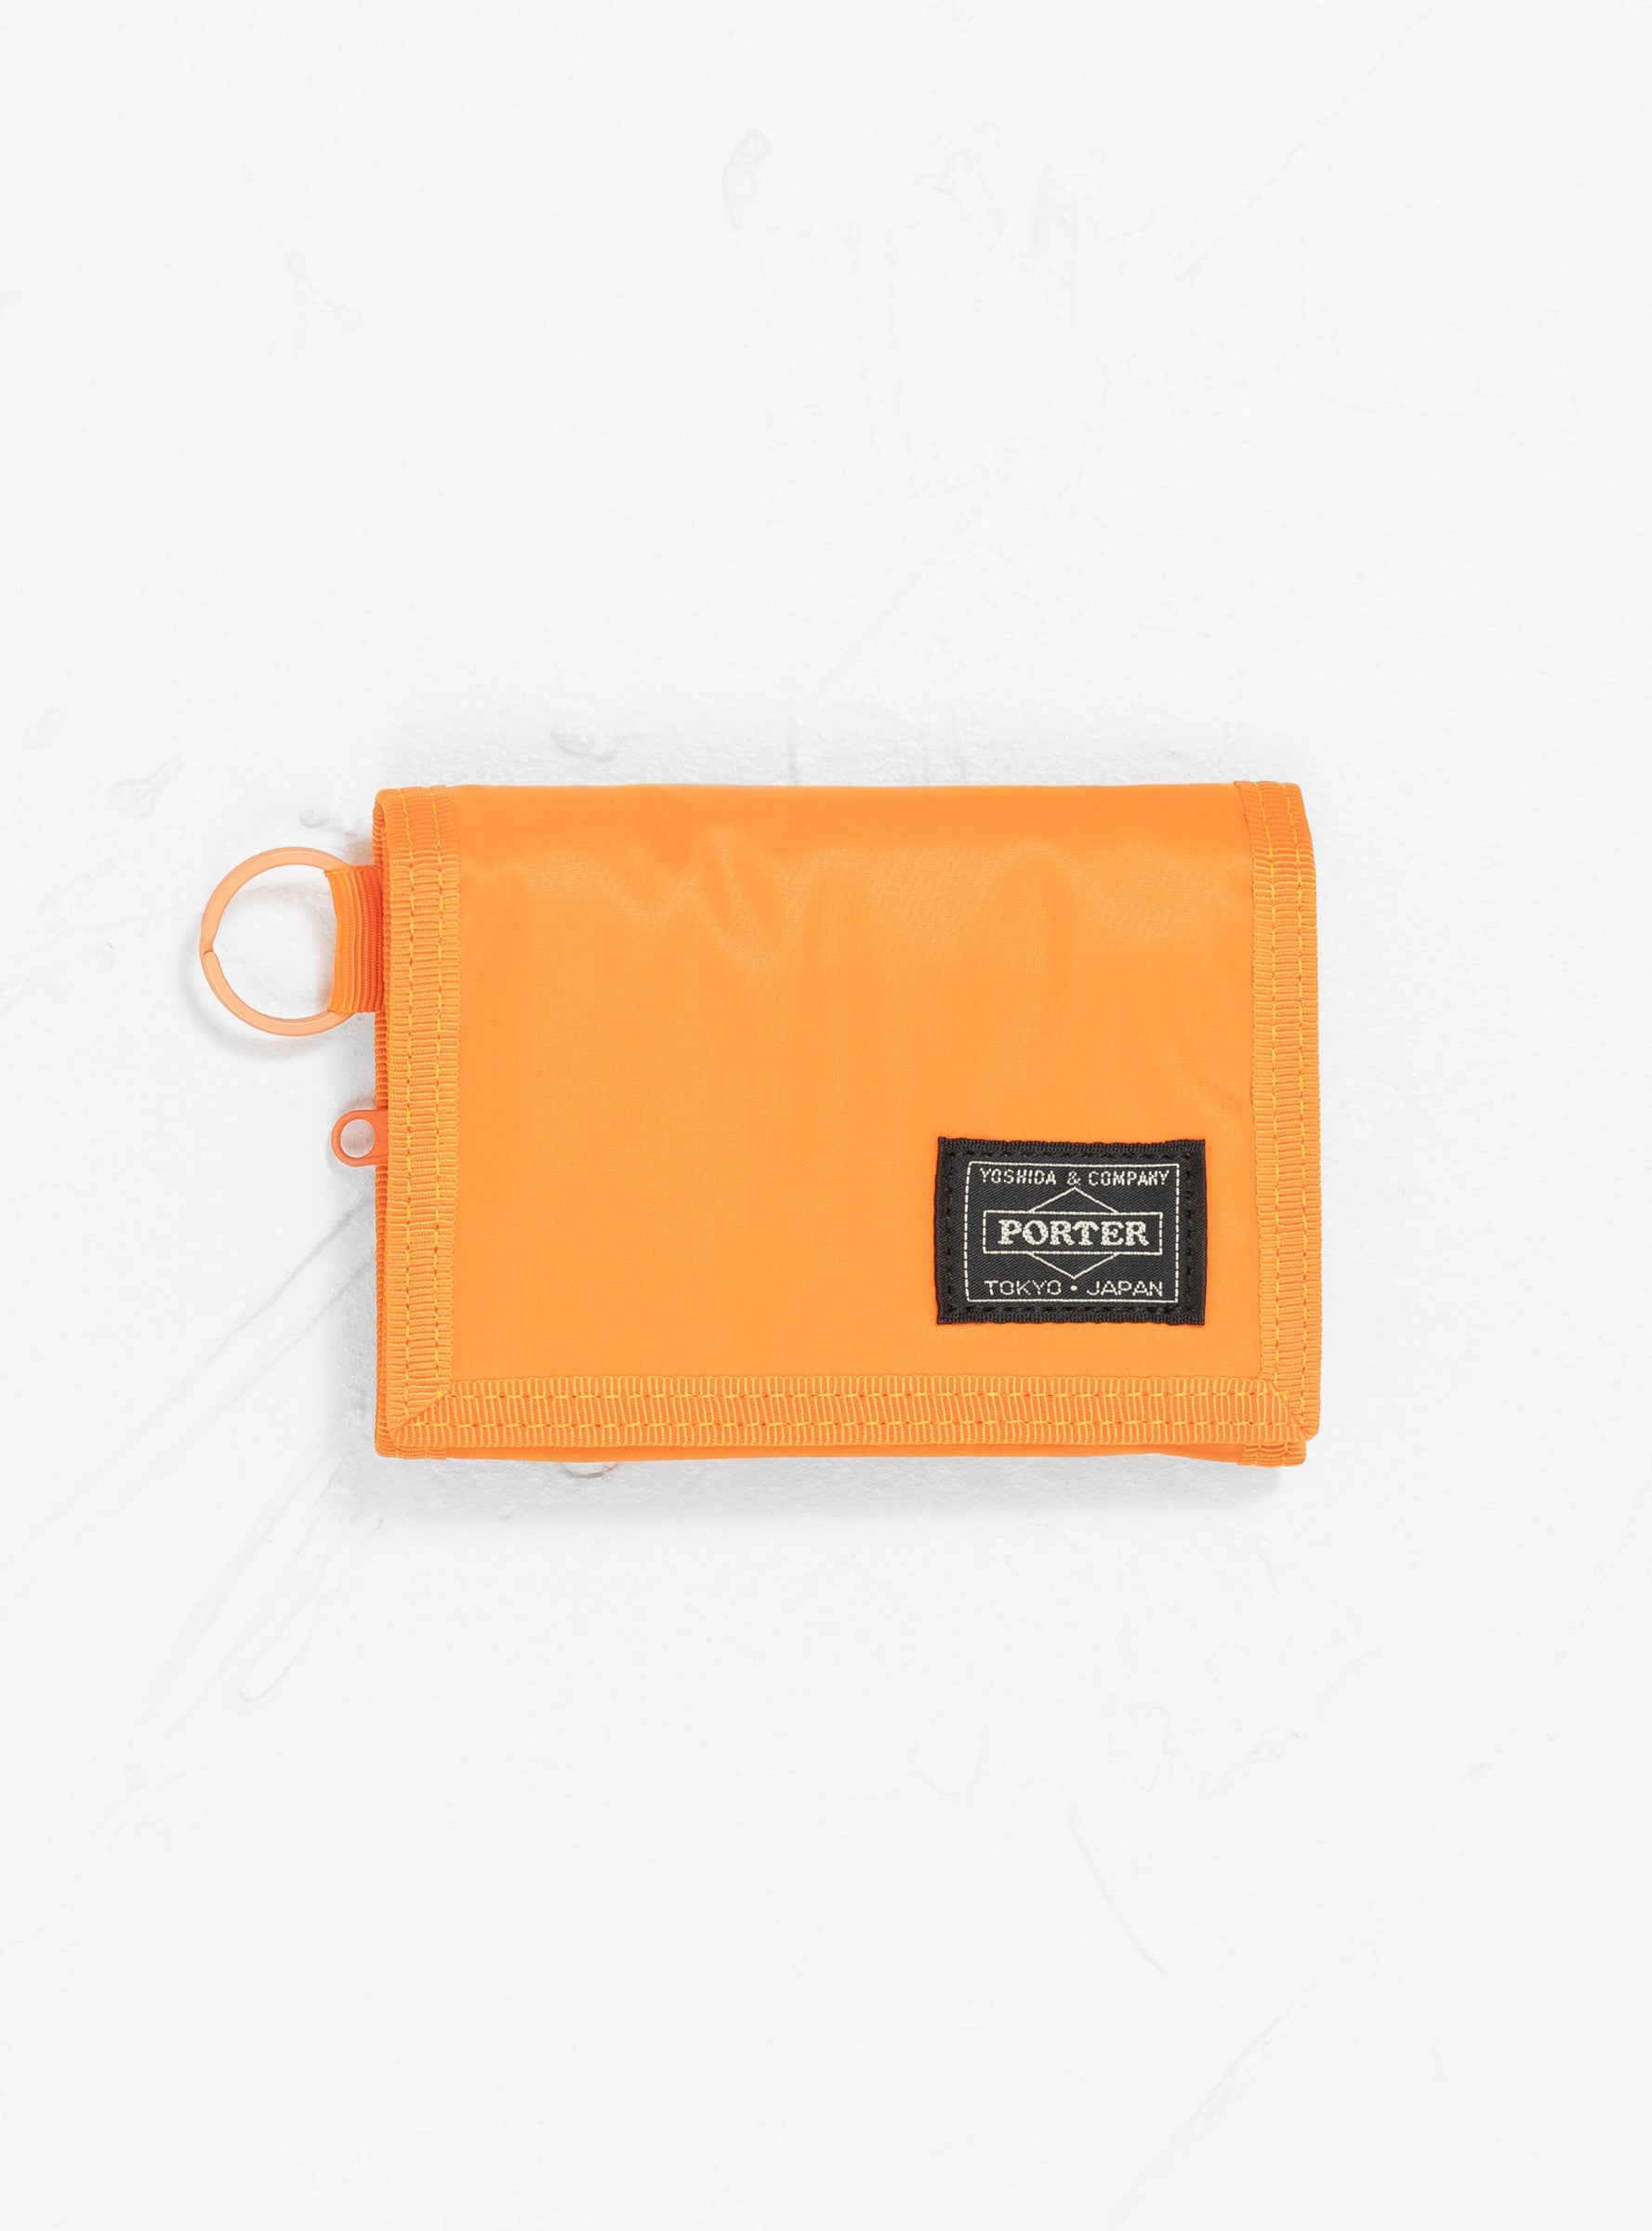  Porter Yoshida & Co. Capsule Wallet Orange